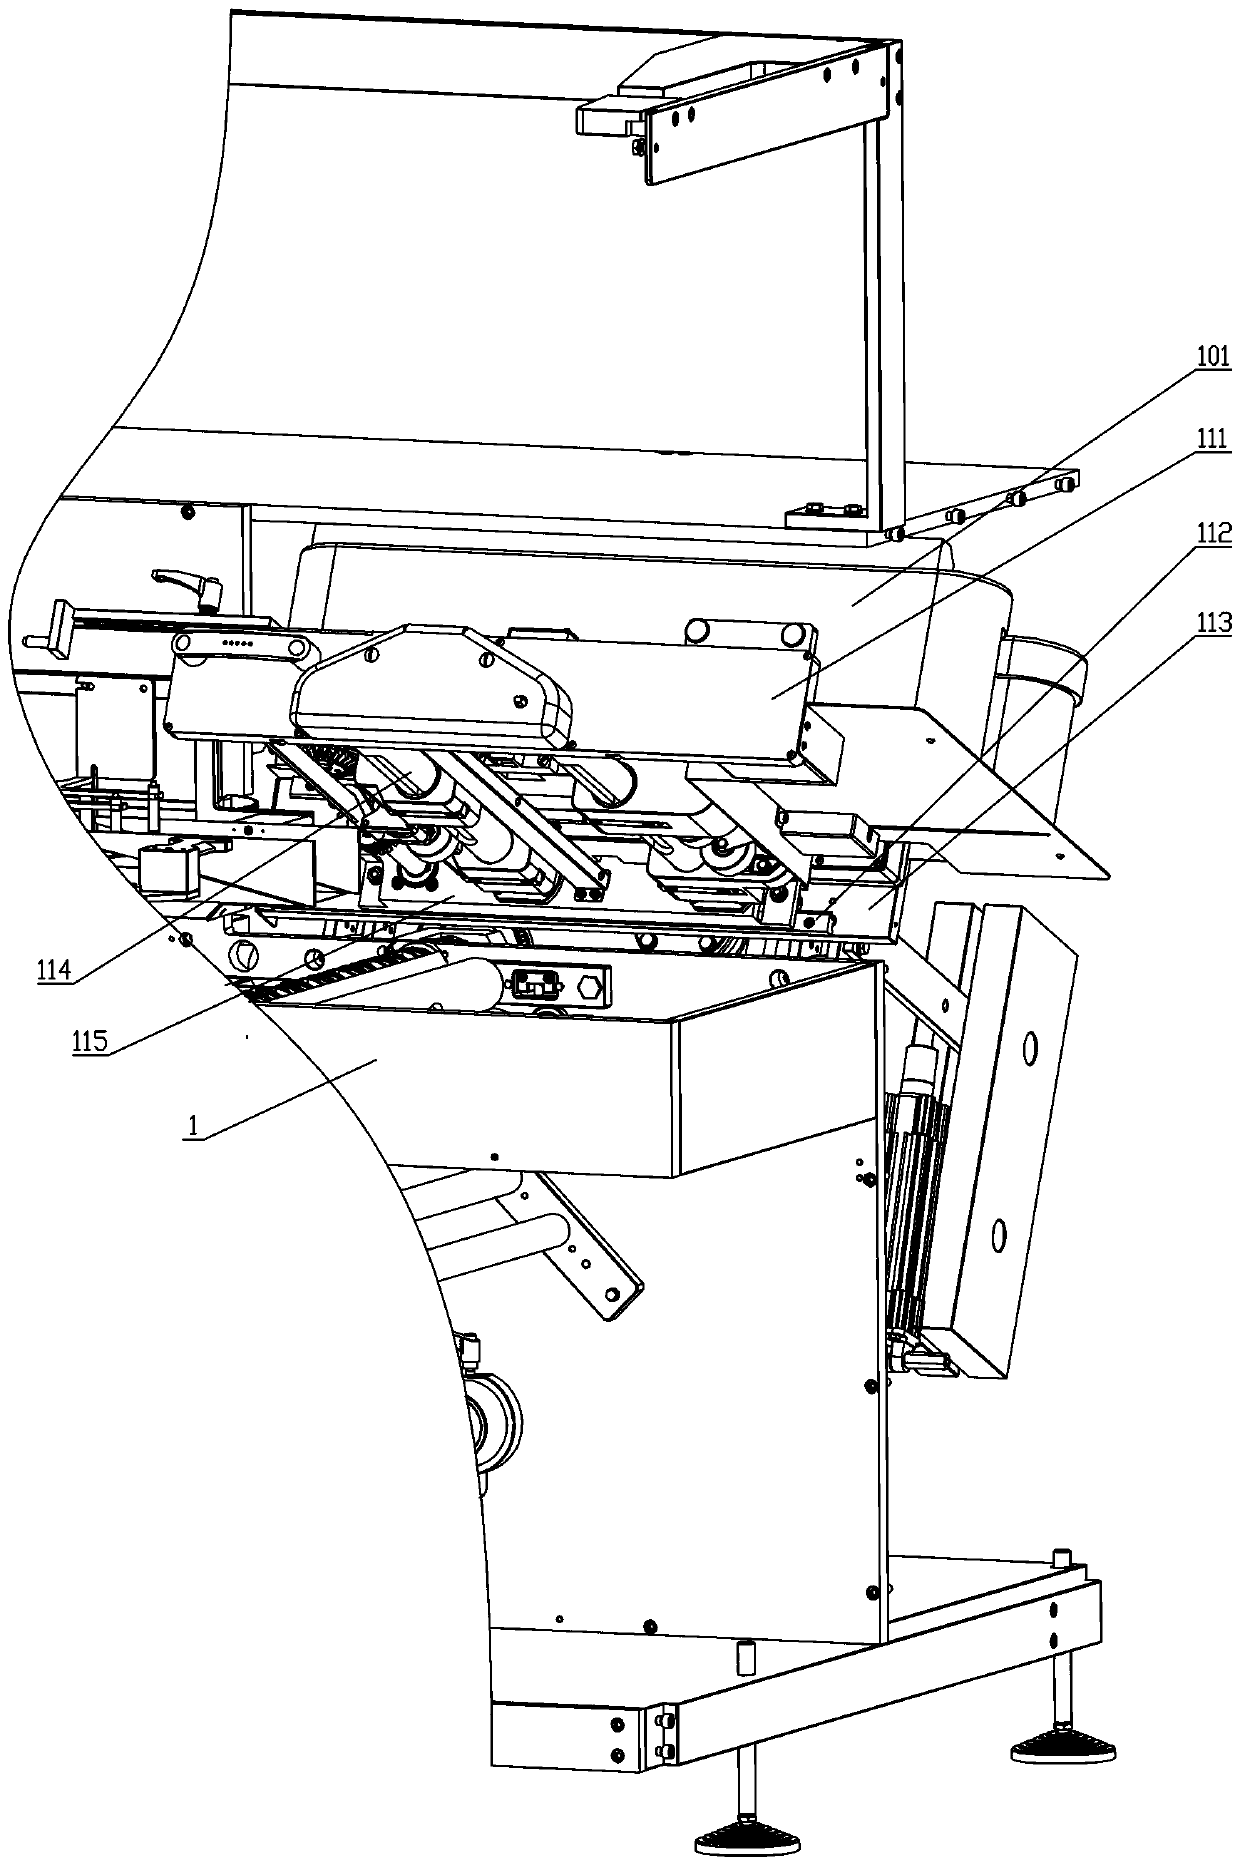 Side sealing mechanism